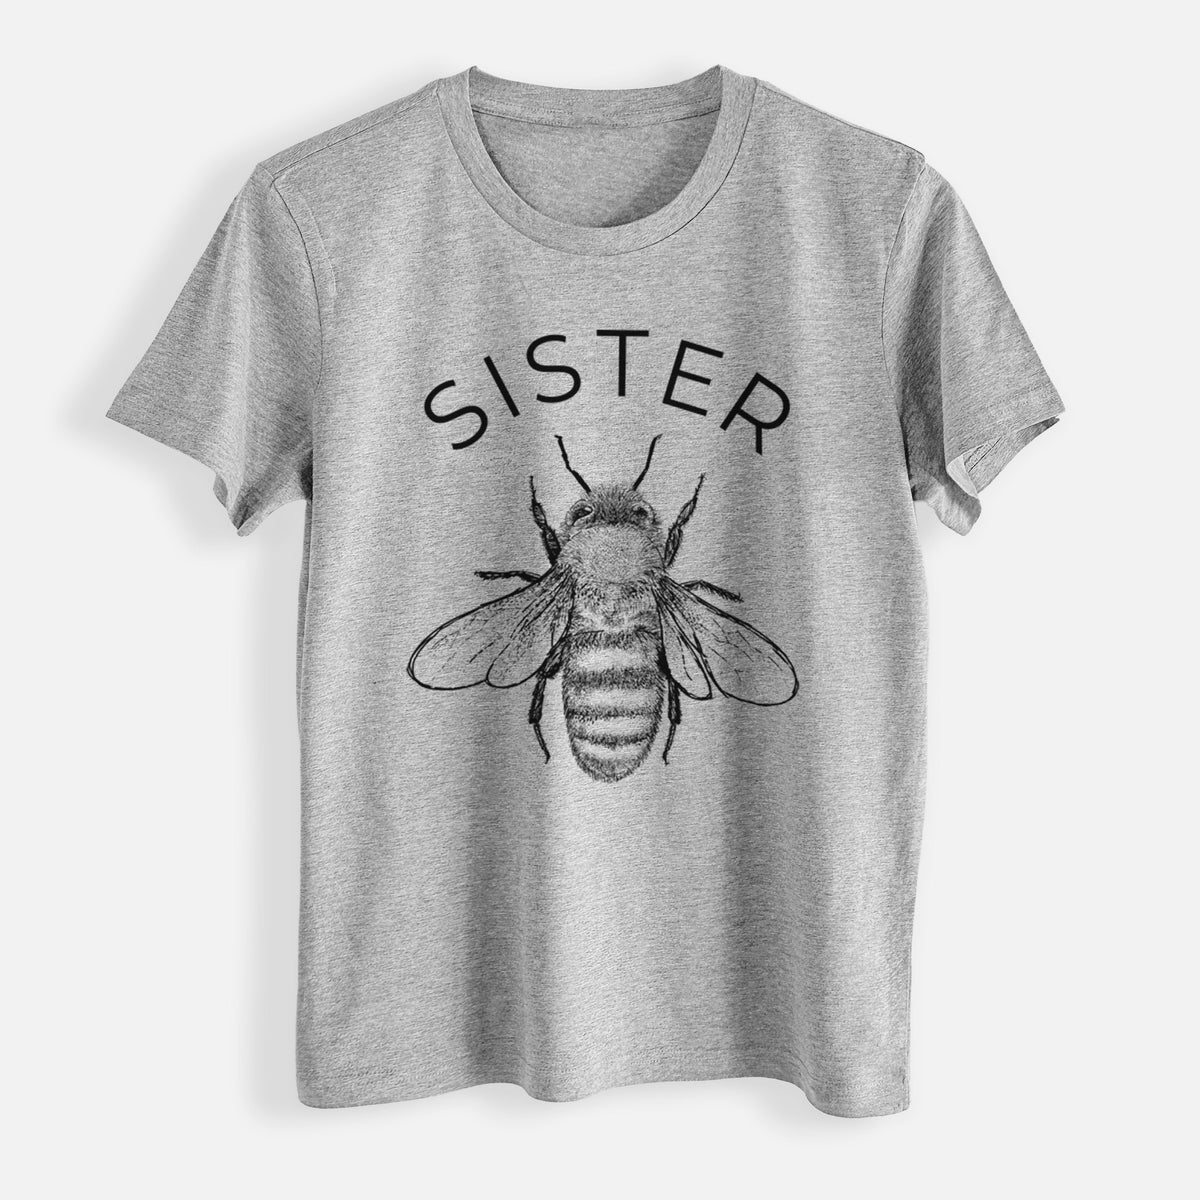 Sister Bee - Womens Everyday Maple Tee